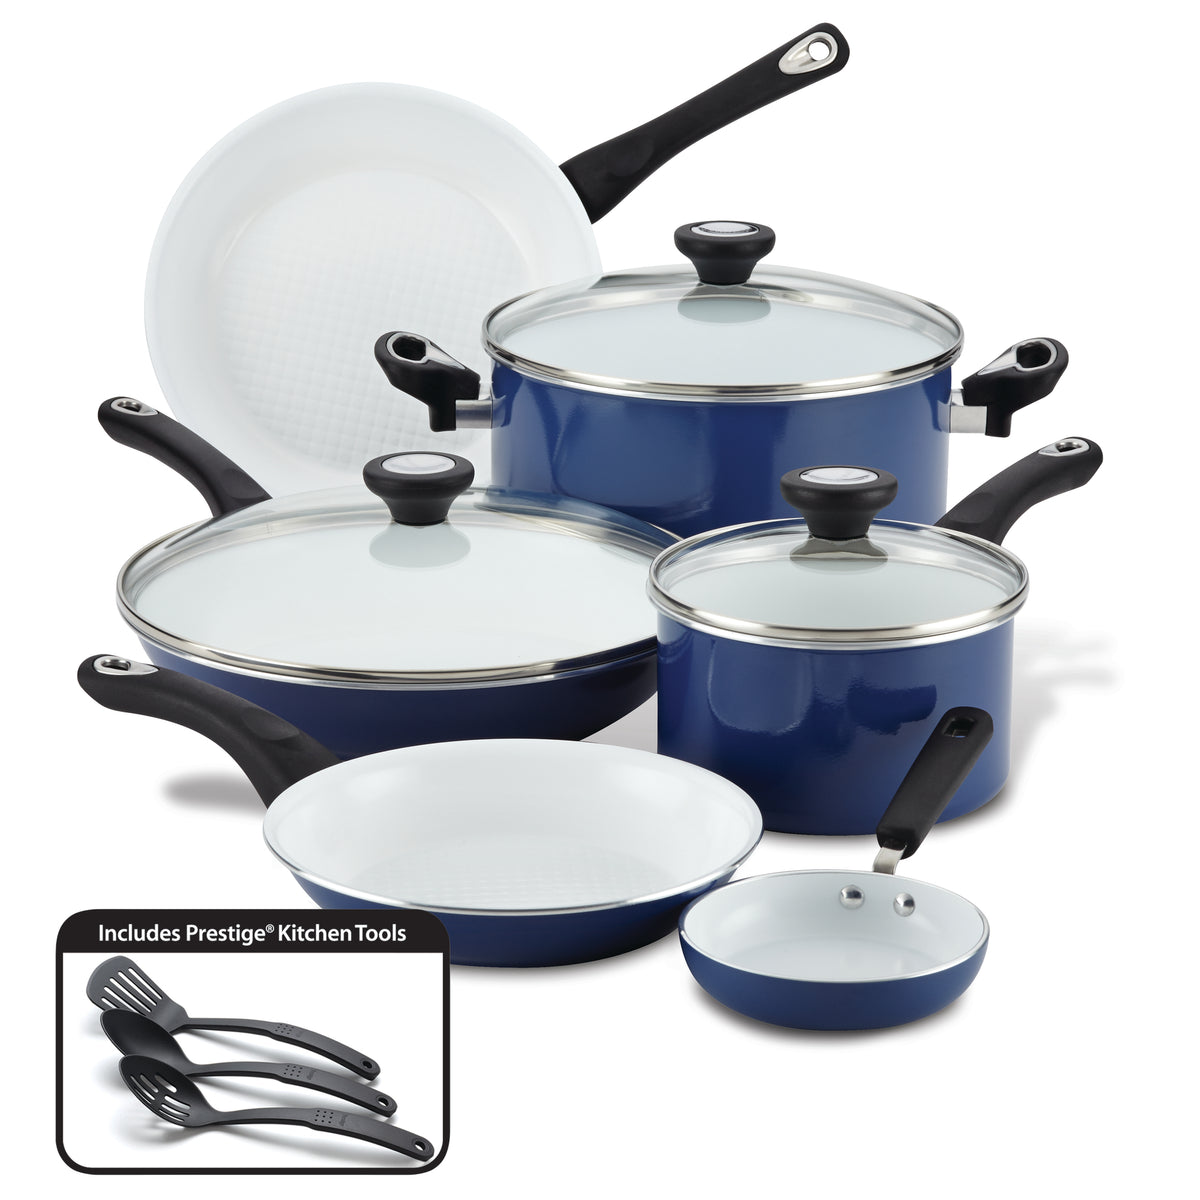 PERLLI Ceramic Nonstick Cookware Pots and Pans Set, 12 Pc Set